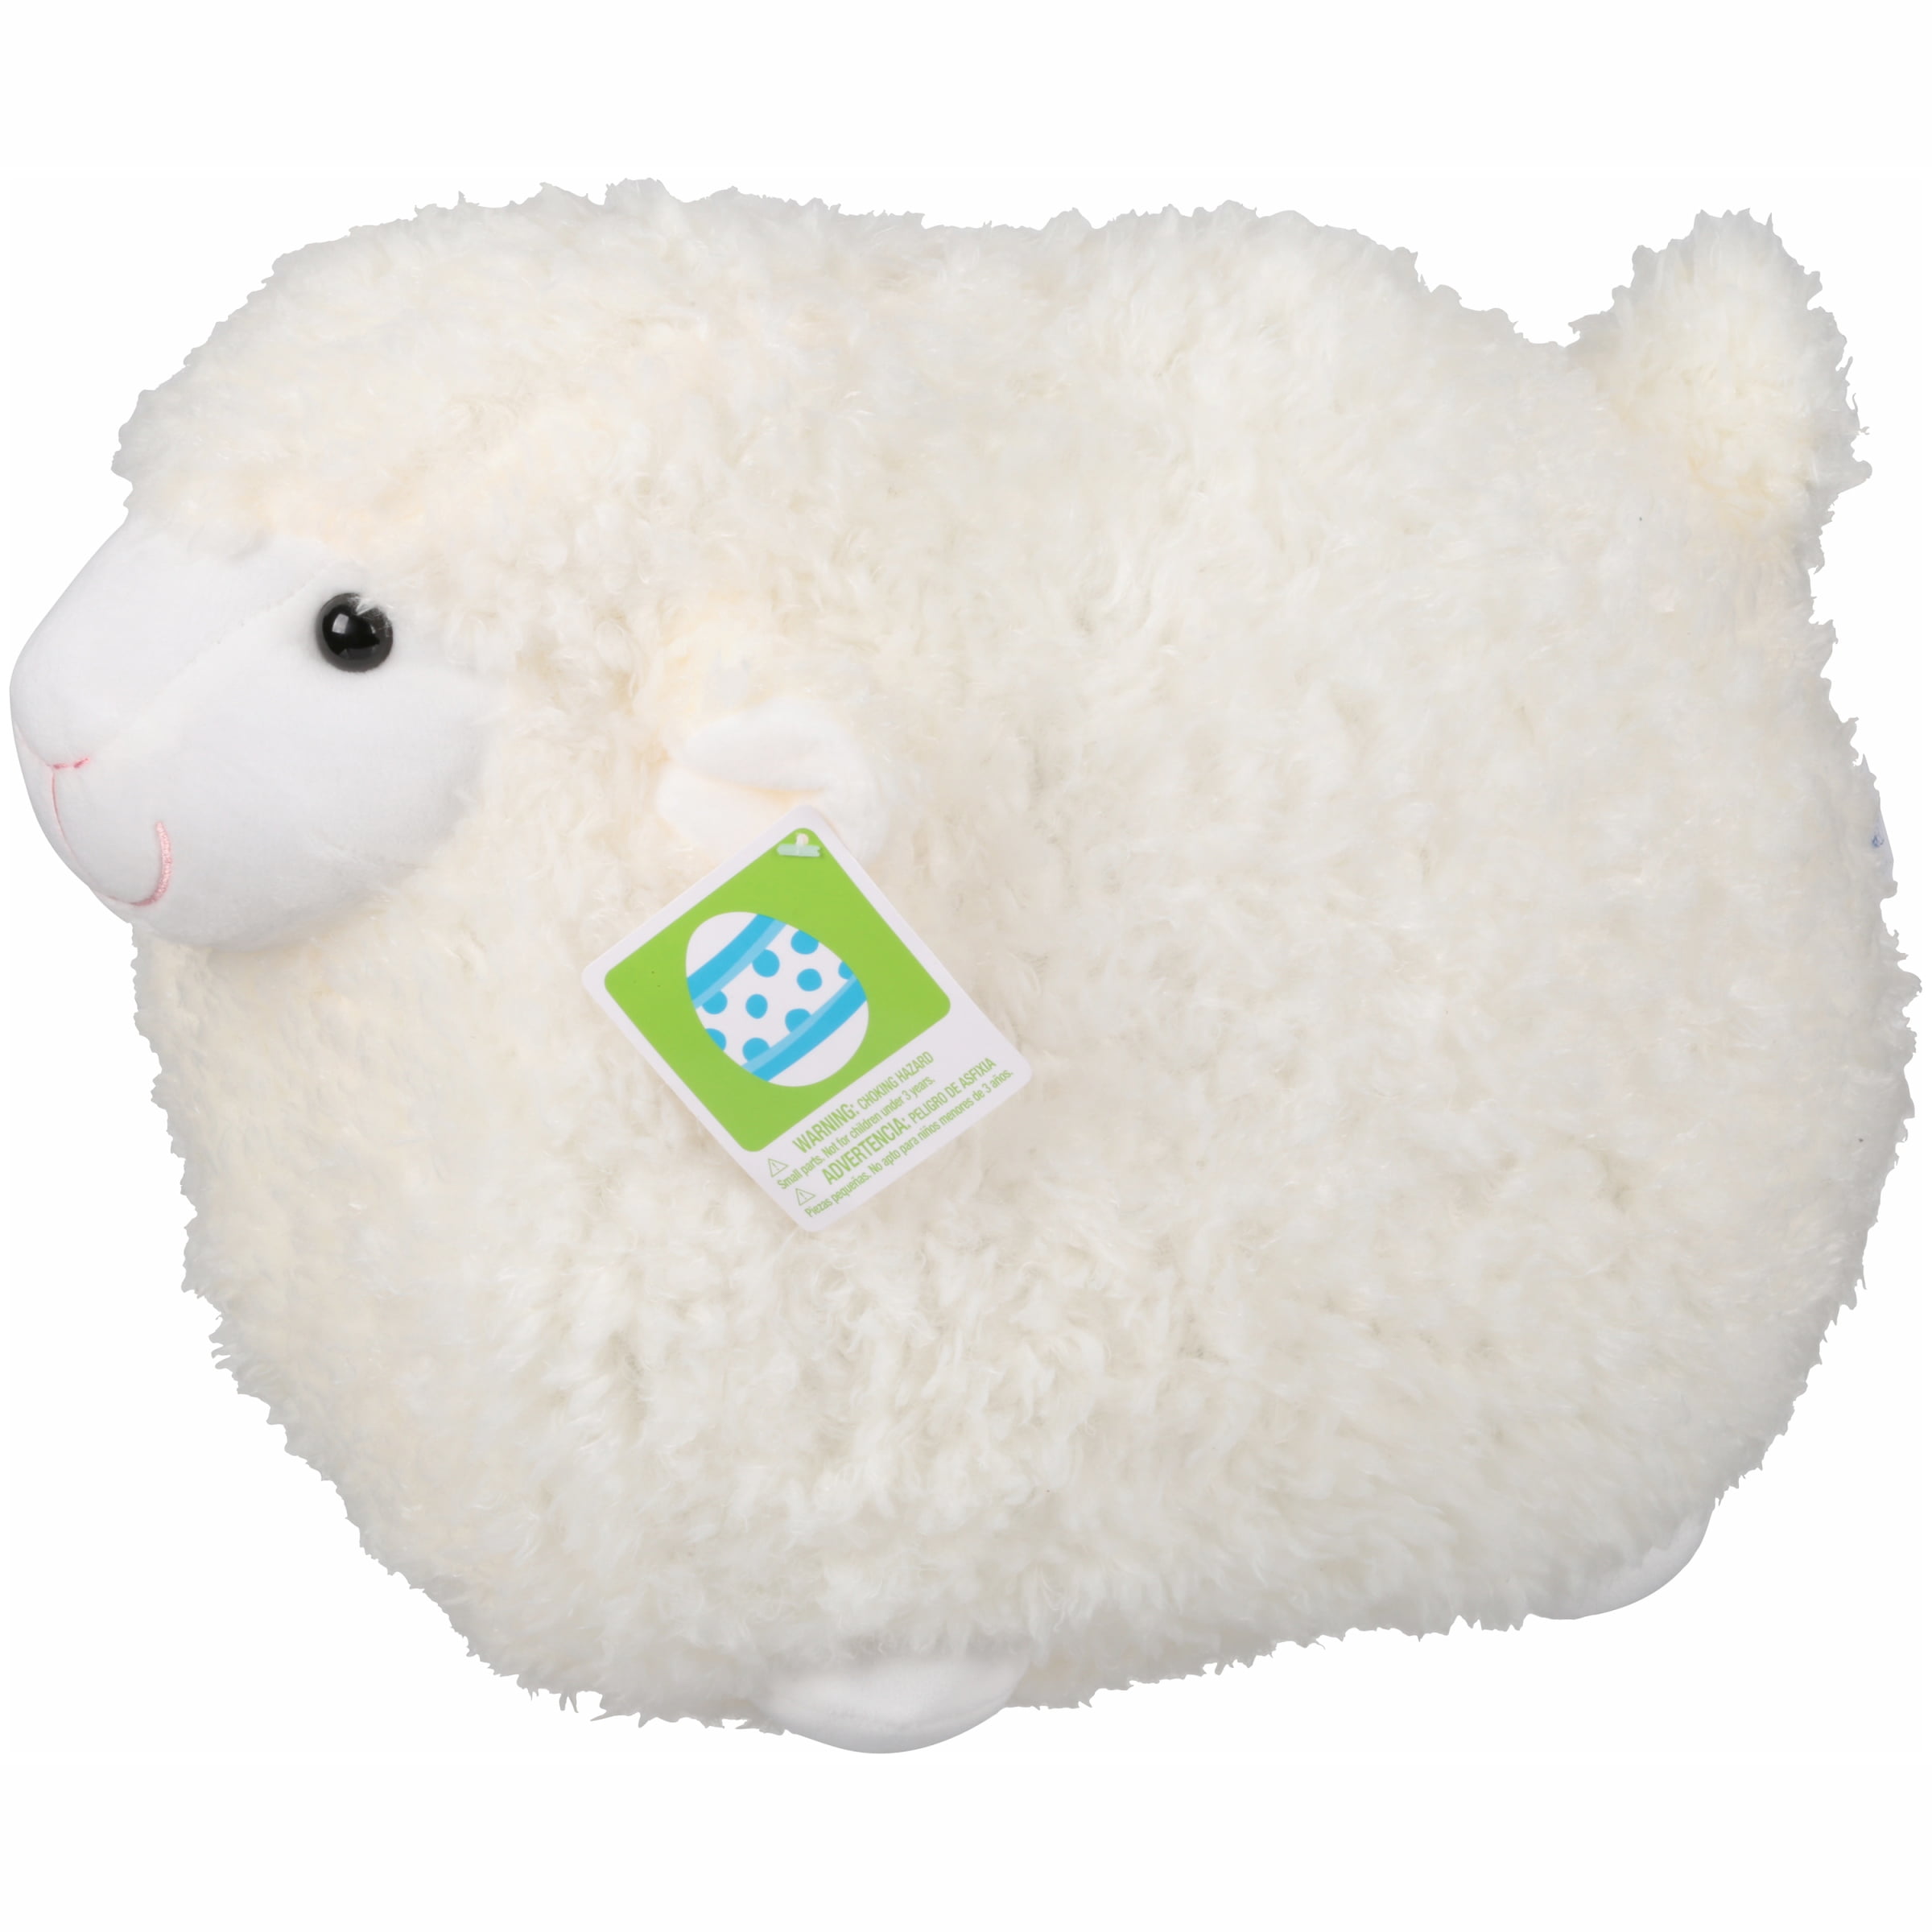 fluffy sheep toy